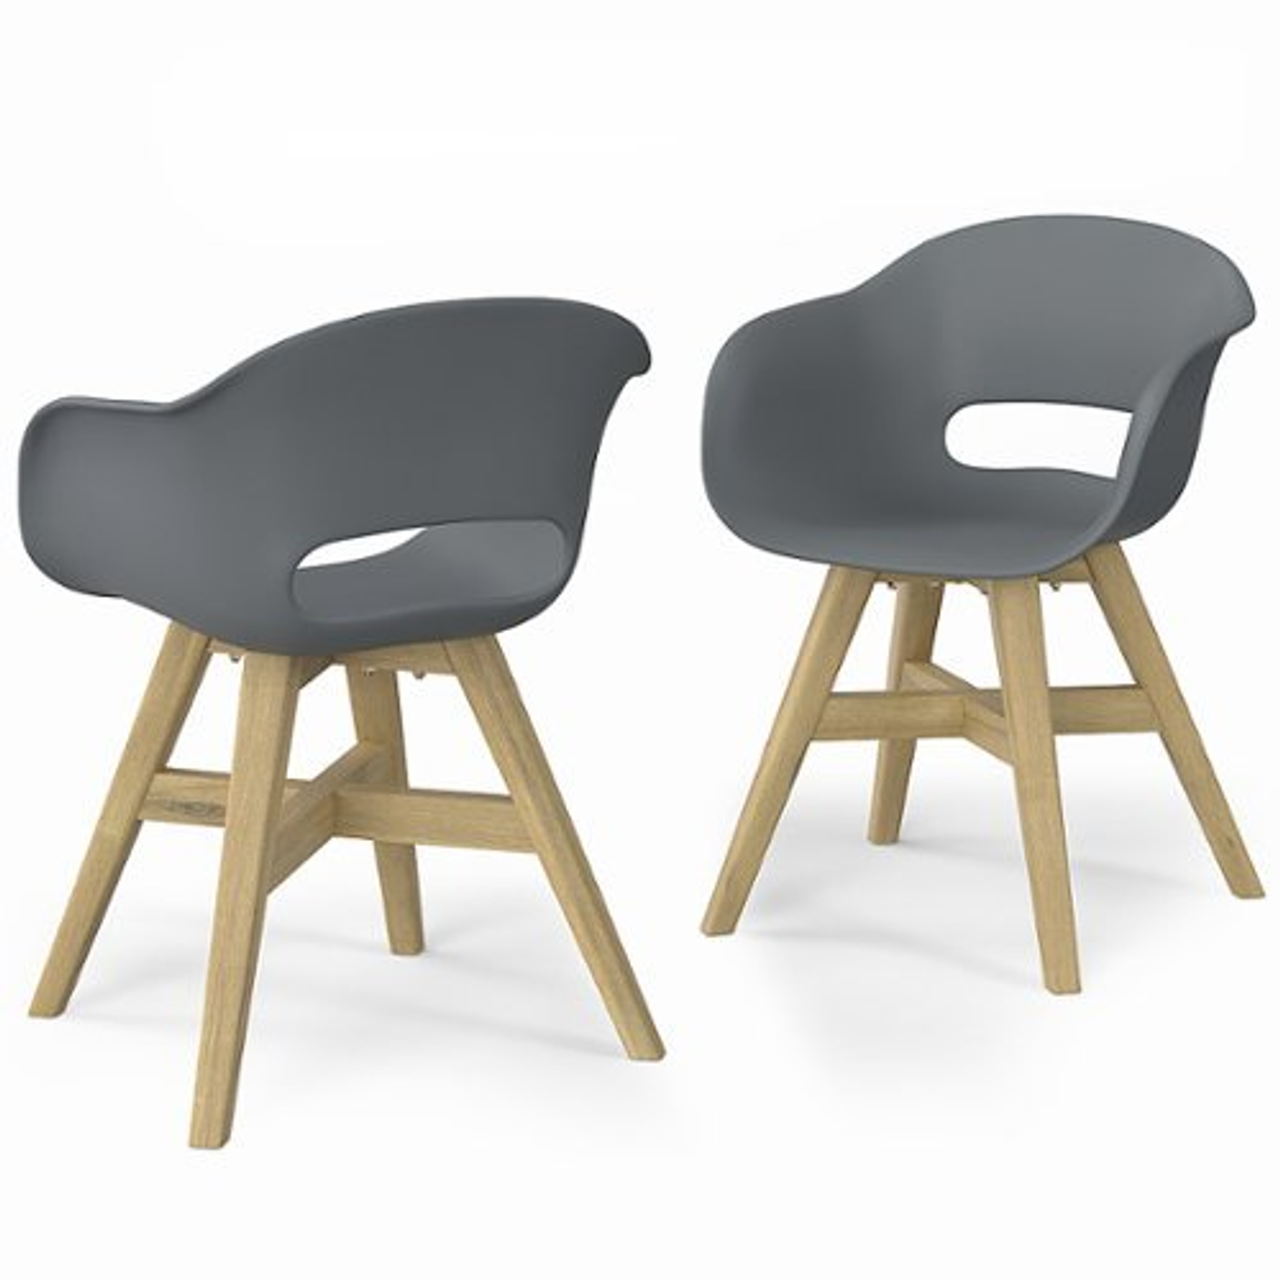 Simpli Home - Kona Outdoor Dining Chair in Plastic ( Set of 2 ) - Pebble Grey